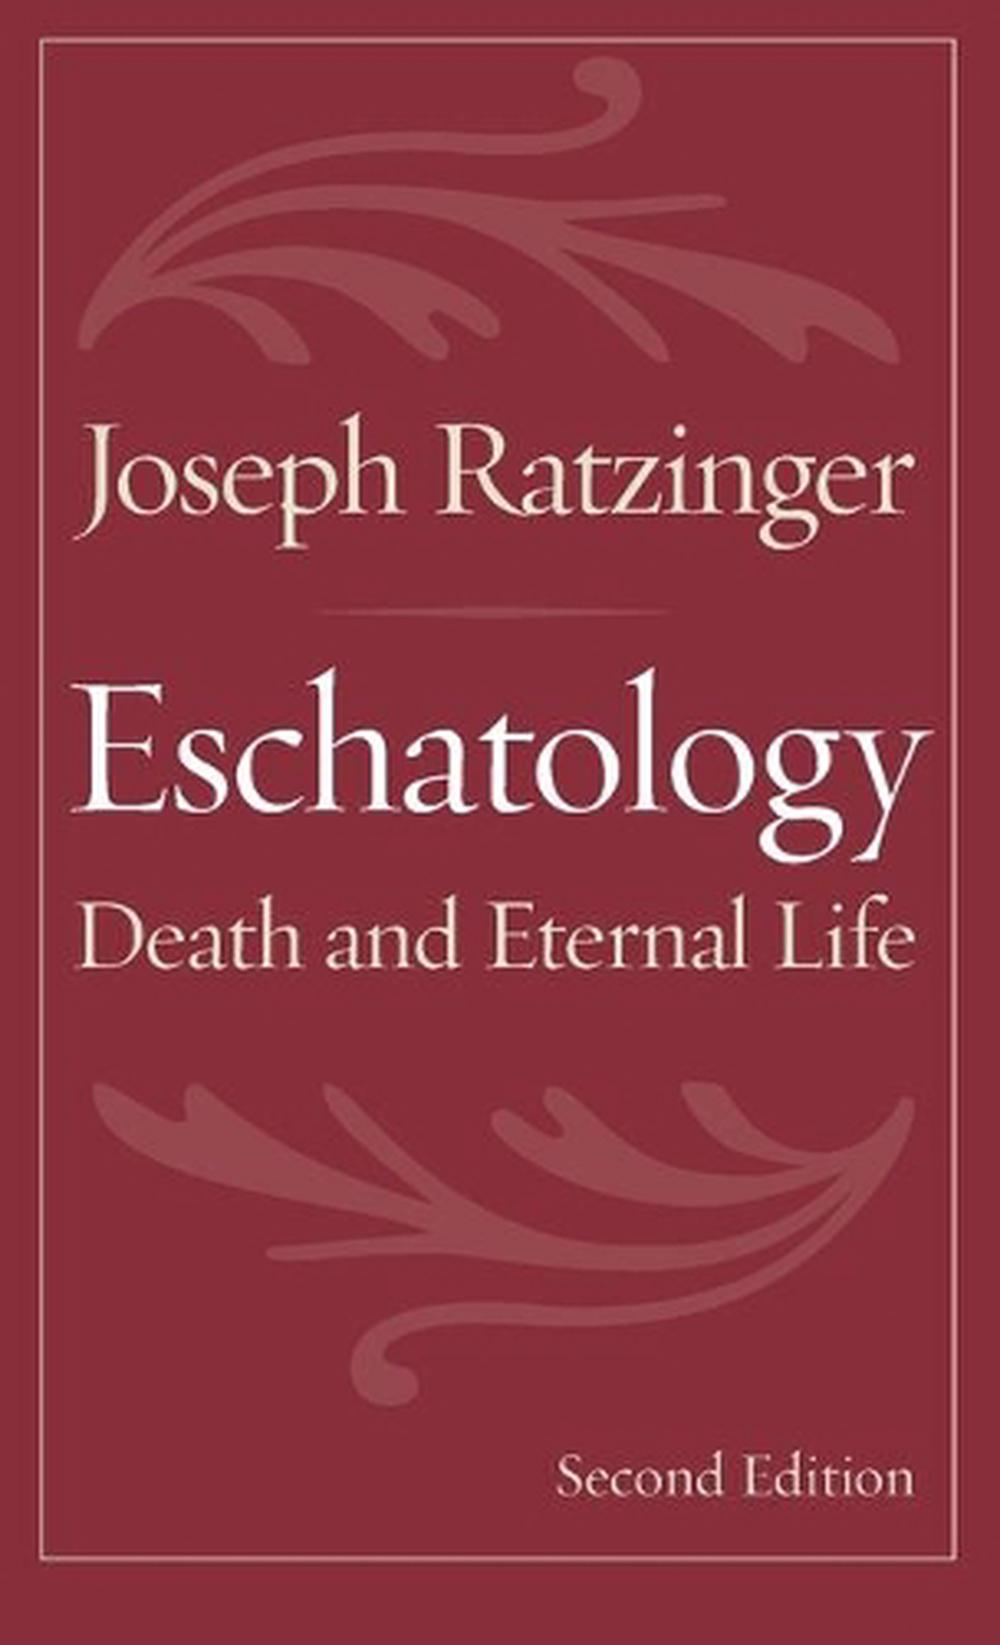 Eschatology Death and Eternal Life by Joseph Ratzinger (English) Paperback Book 9780813215167